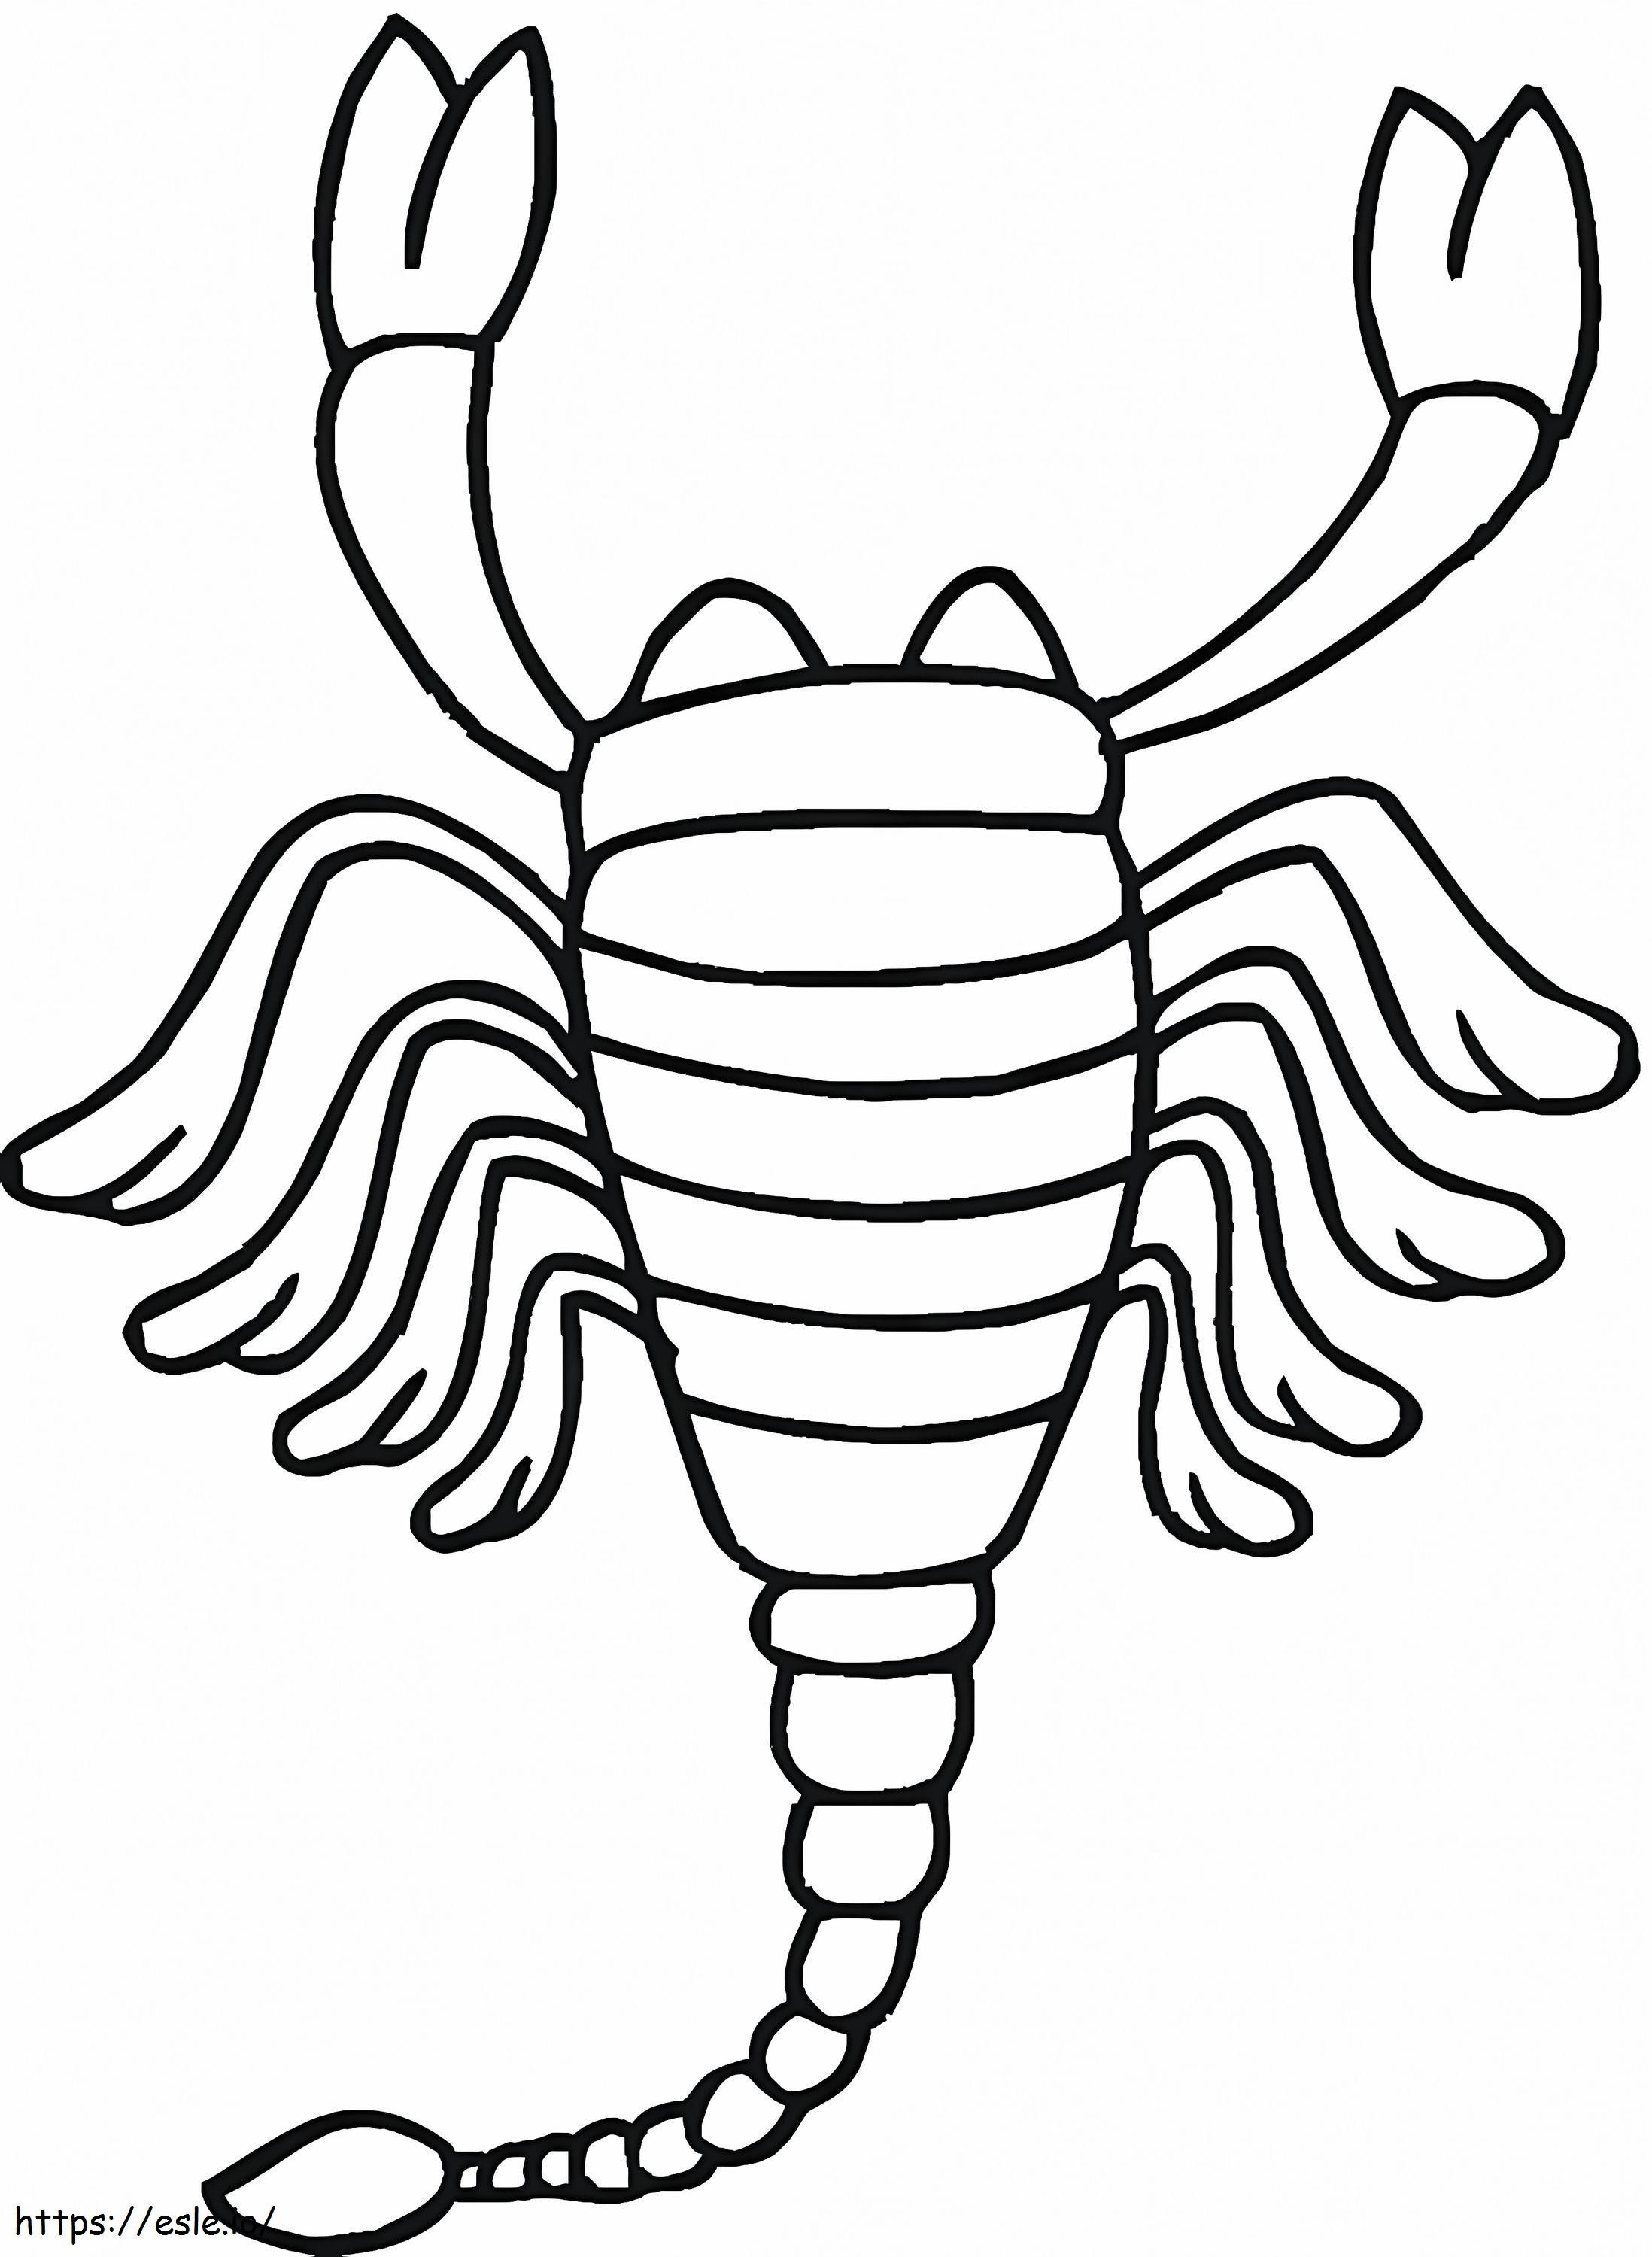 Coloriage Scorpions 10 à imprimer dessin